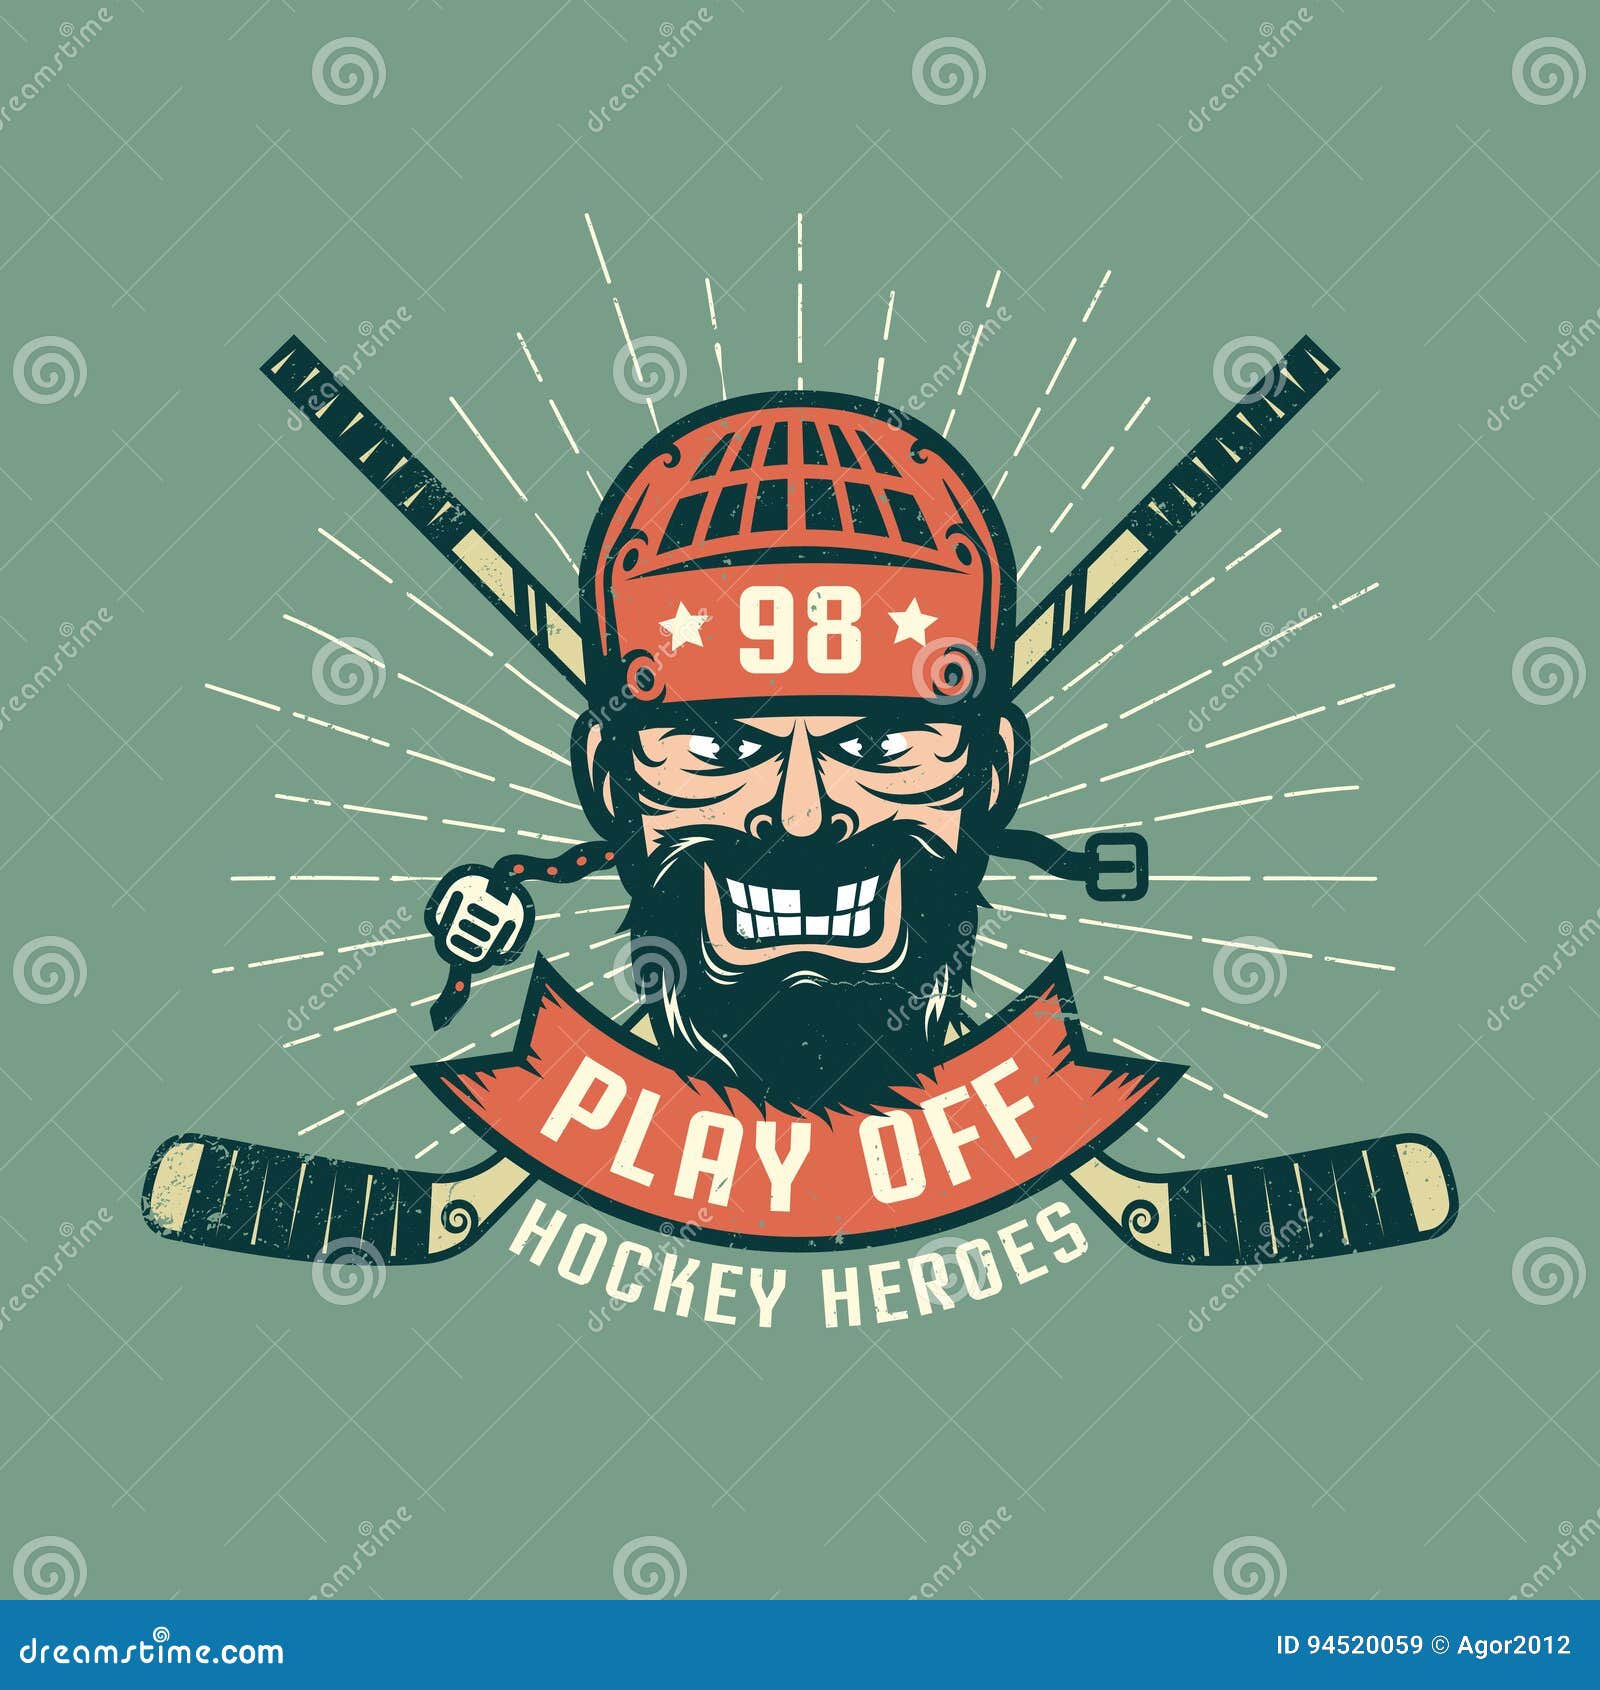 Logo for hockey team - Goalie mask crossed hockey sticks, vintage